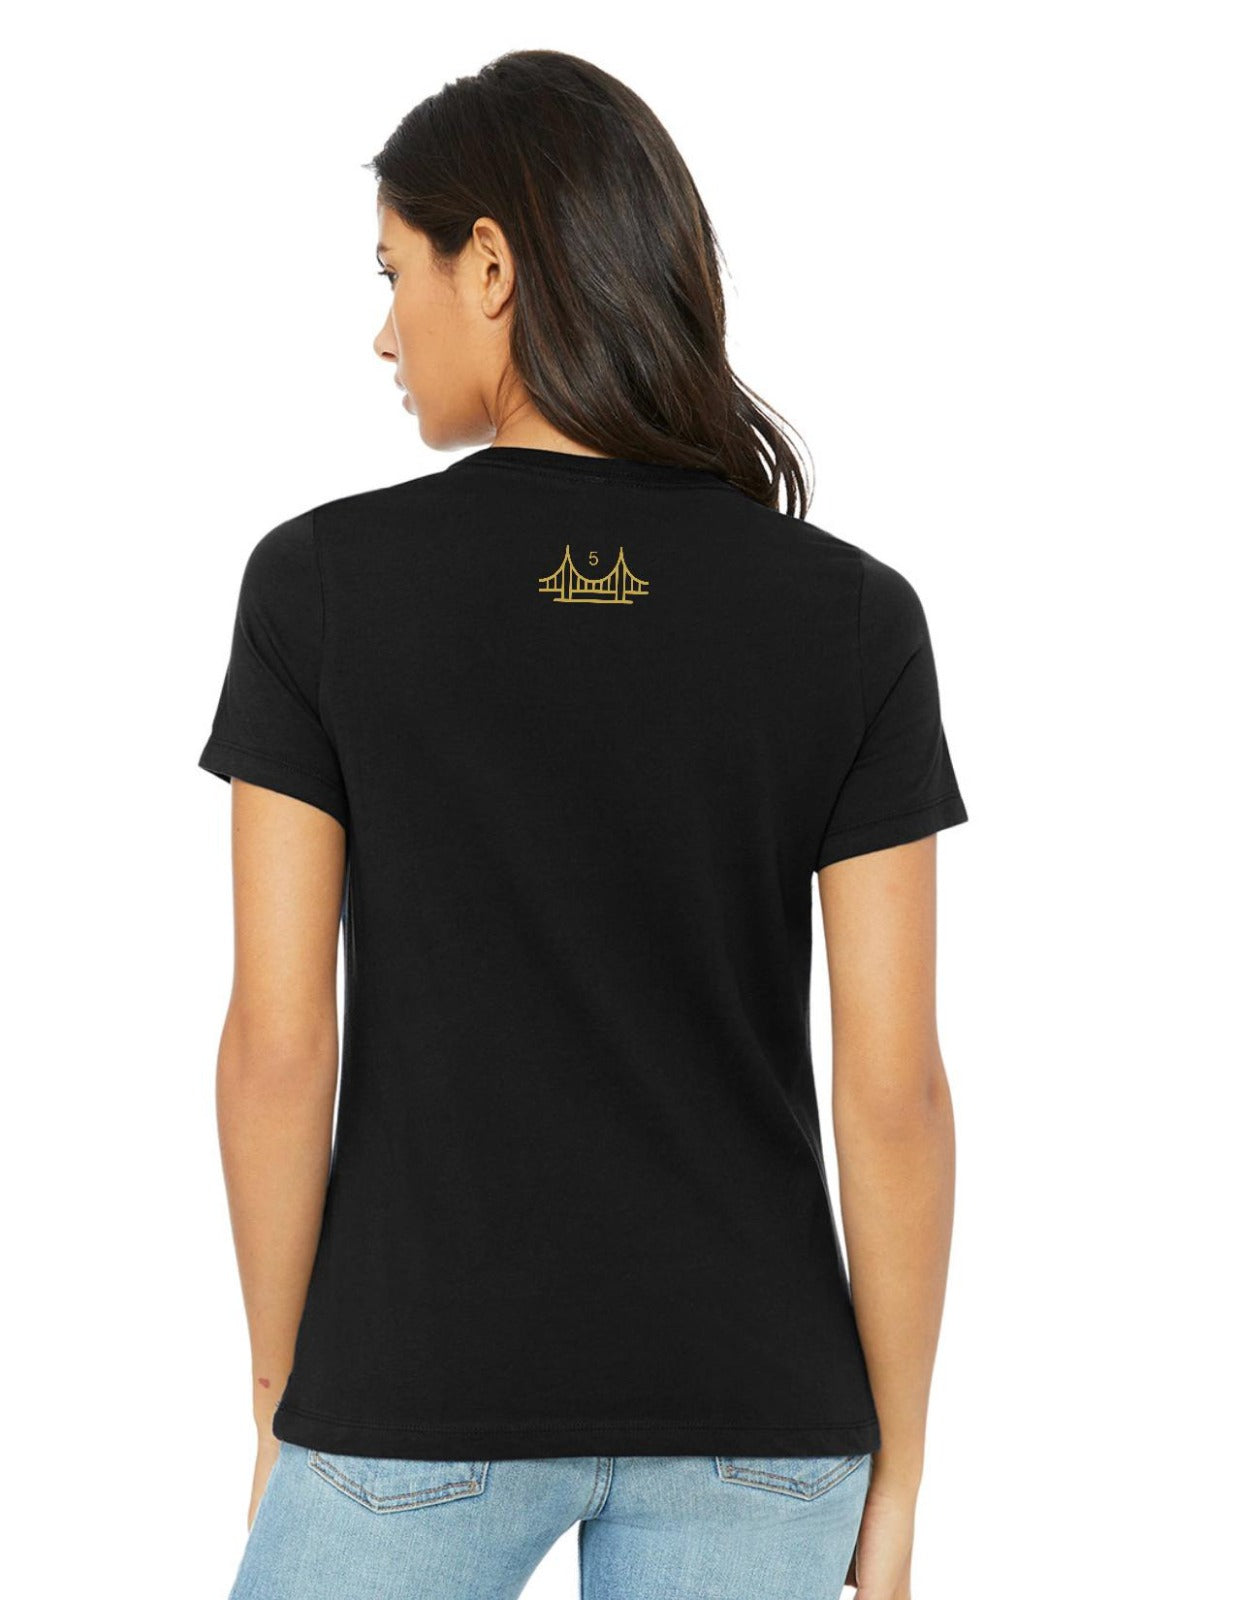 100 SAS C17 - Limited Edition - BLACK & GOLD T-shirt - PREORDER